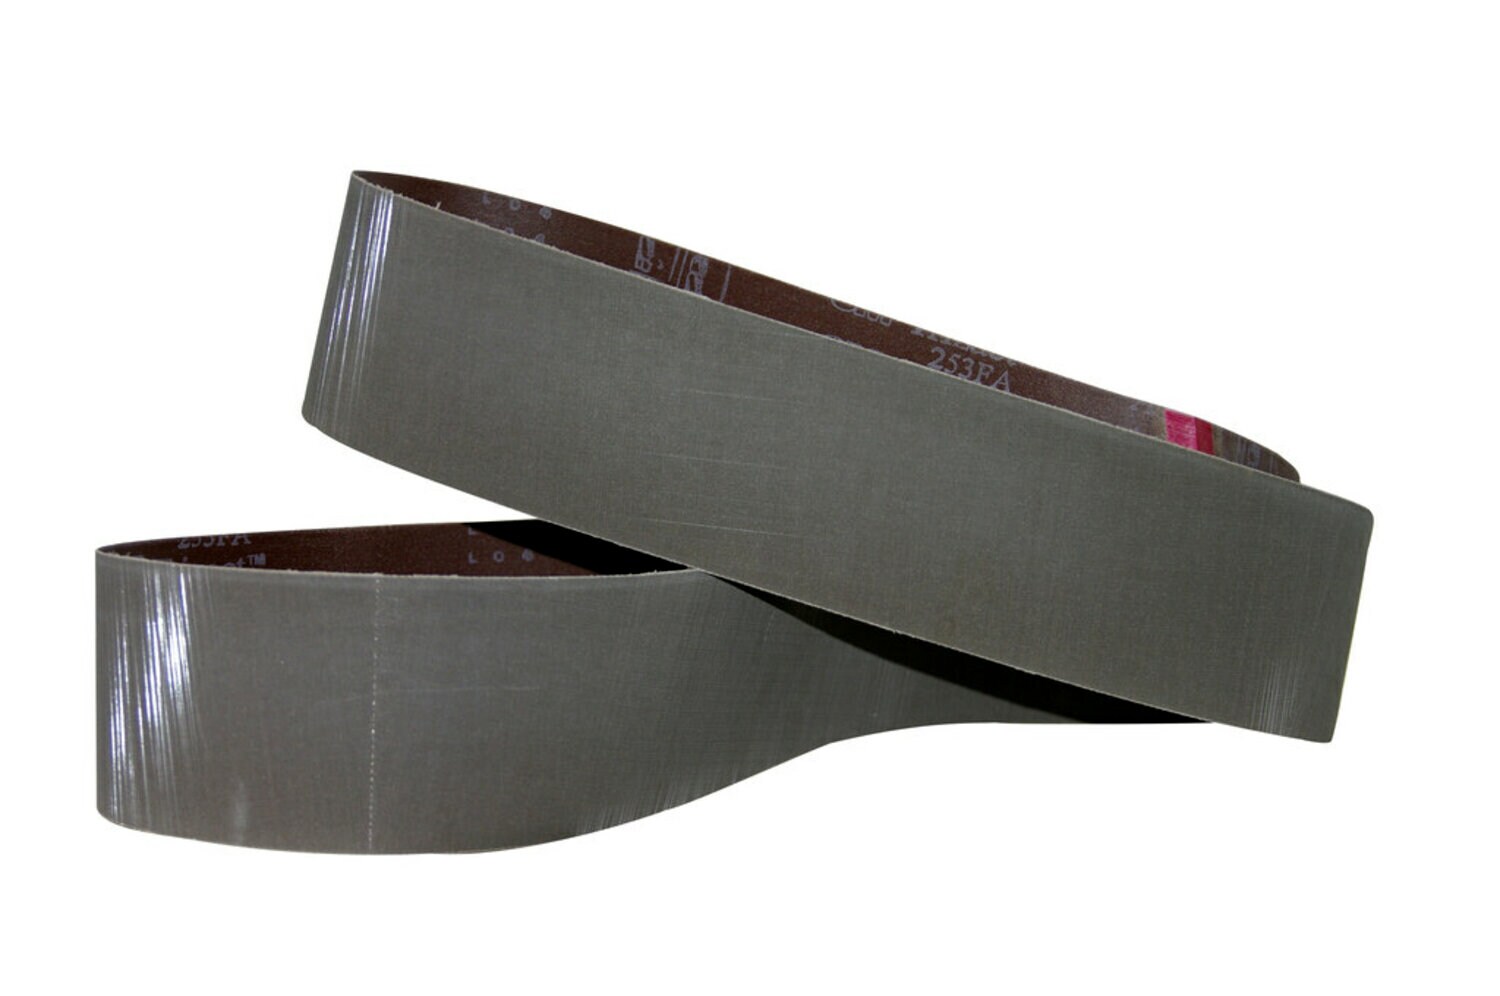 7010298868 - 3M Trizact Cloth Belt 253FA, A100 XF-weight, 14 in x 59 in, Film-lok,
Full-flex, 10 ea/Case